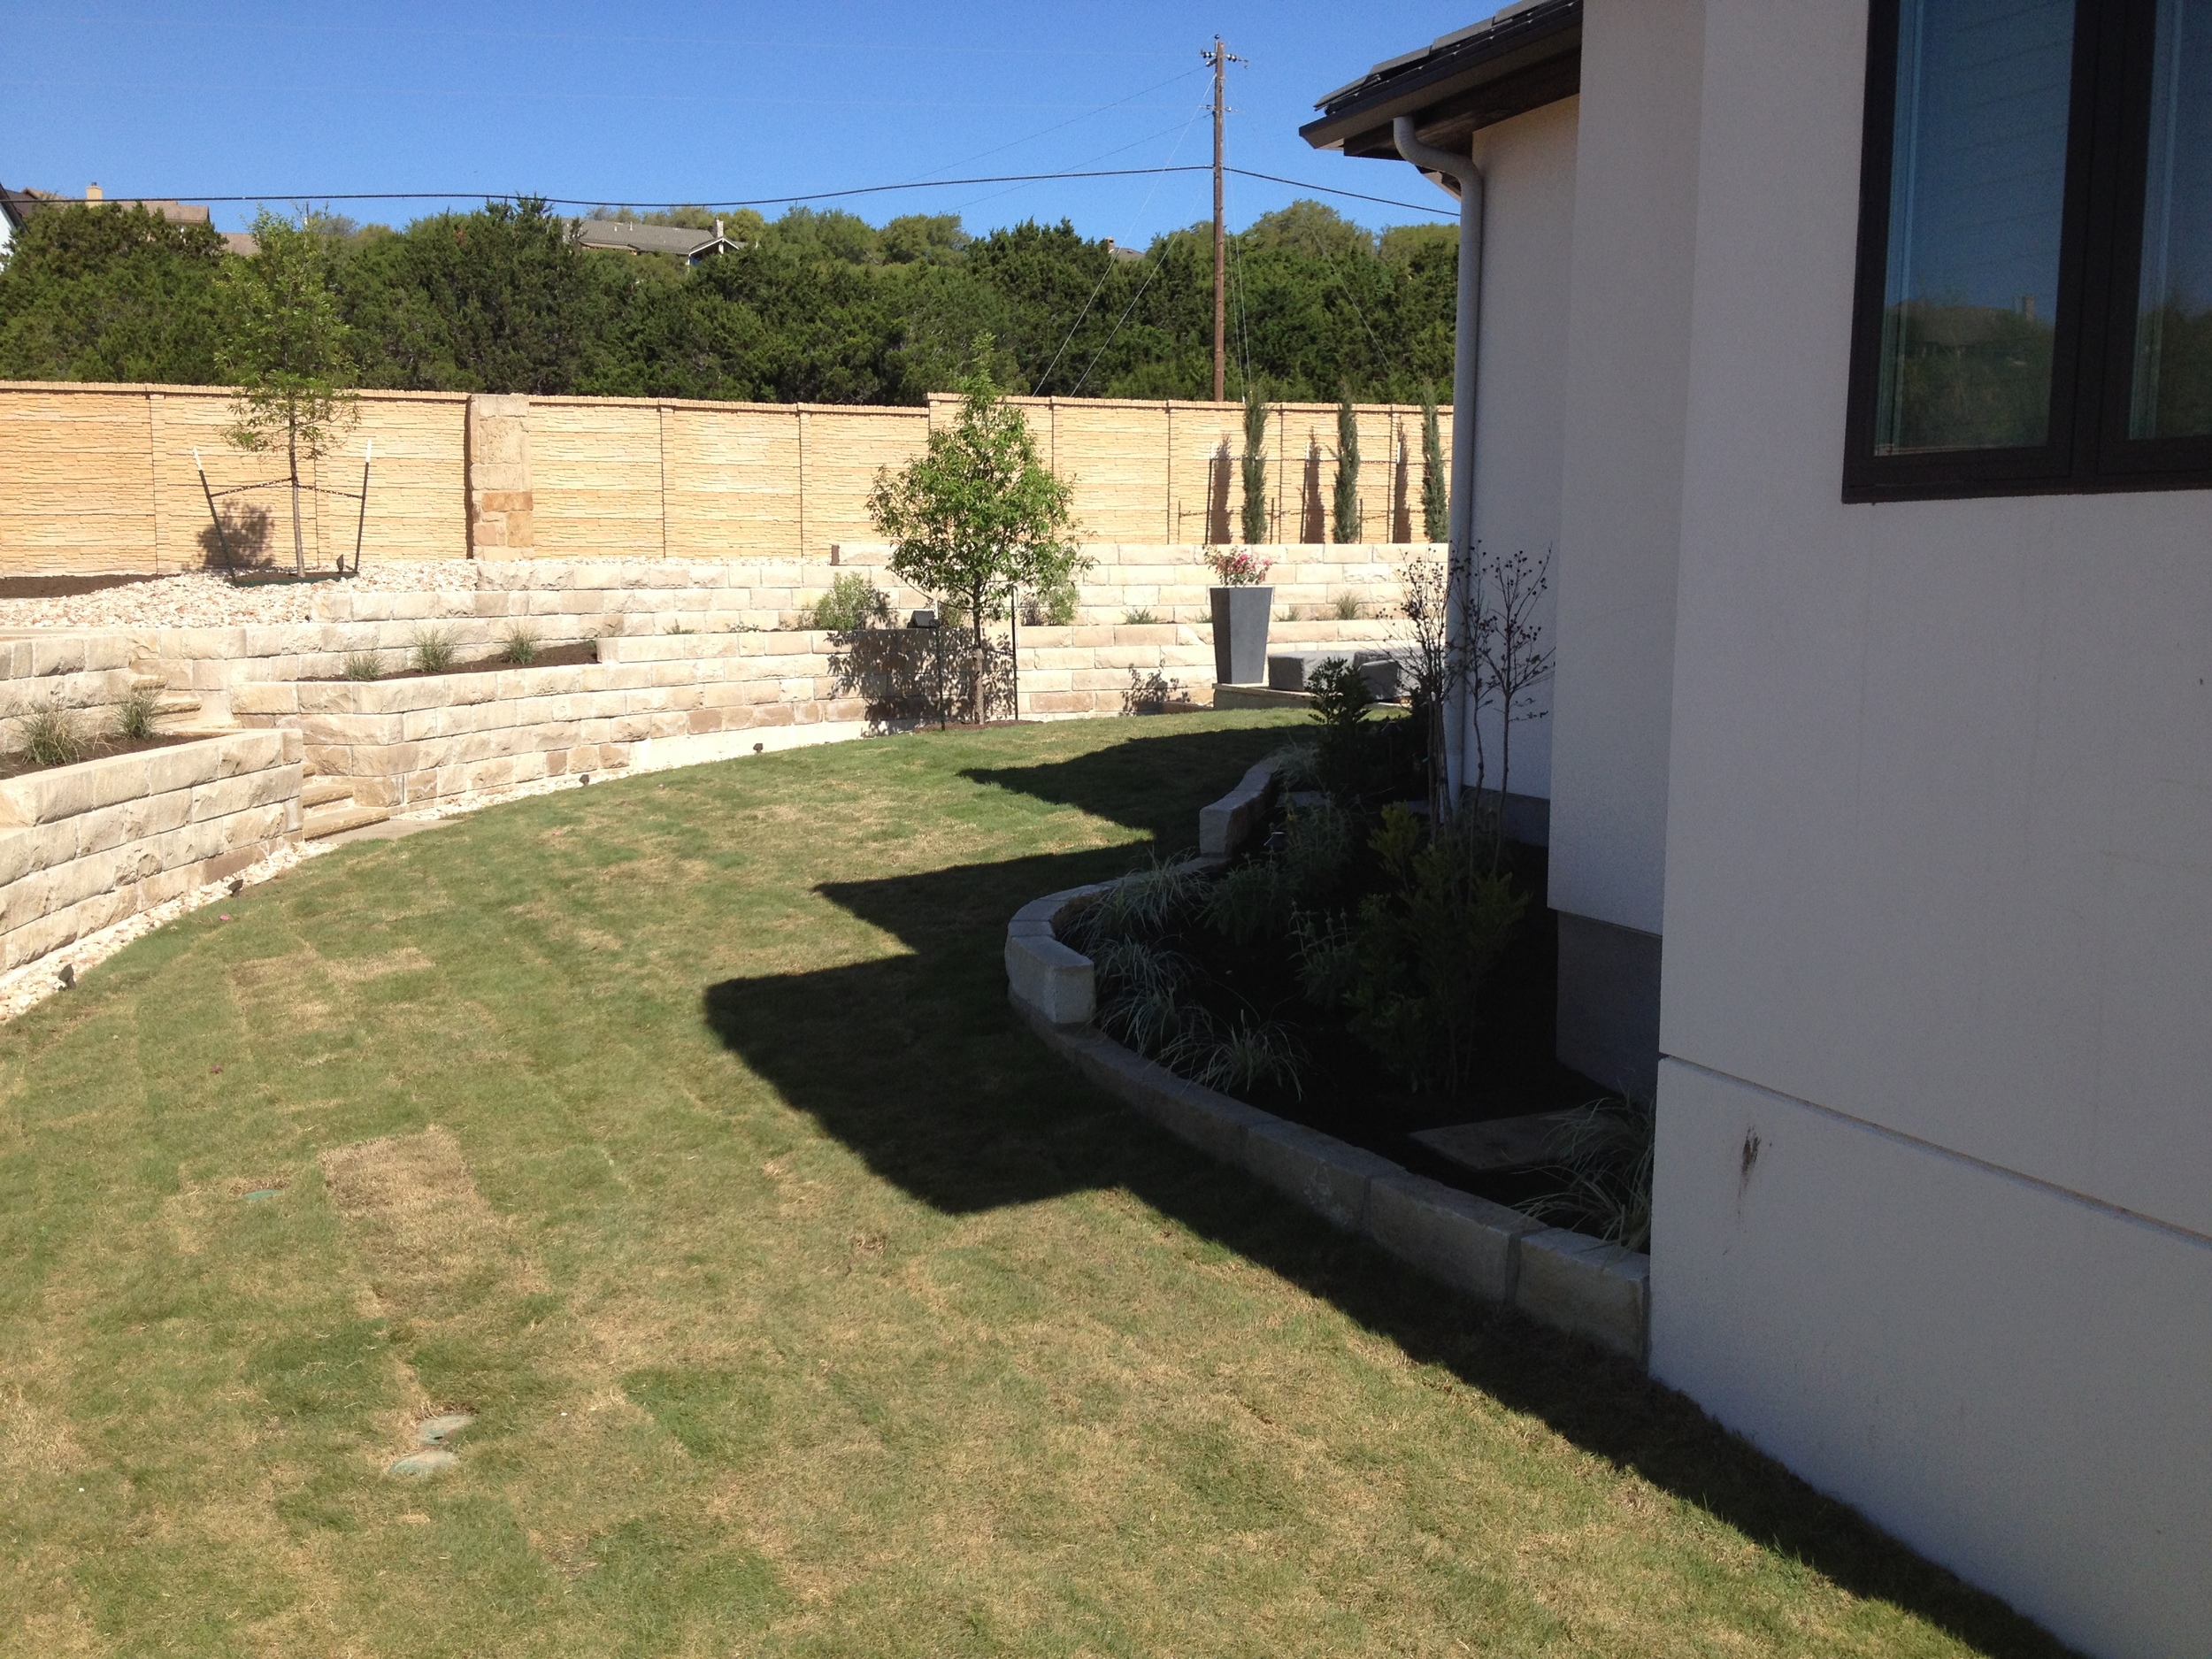 Beds - grass - Landscape for front and back yard (4).JPG